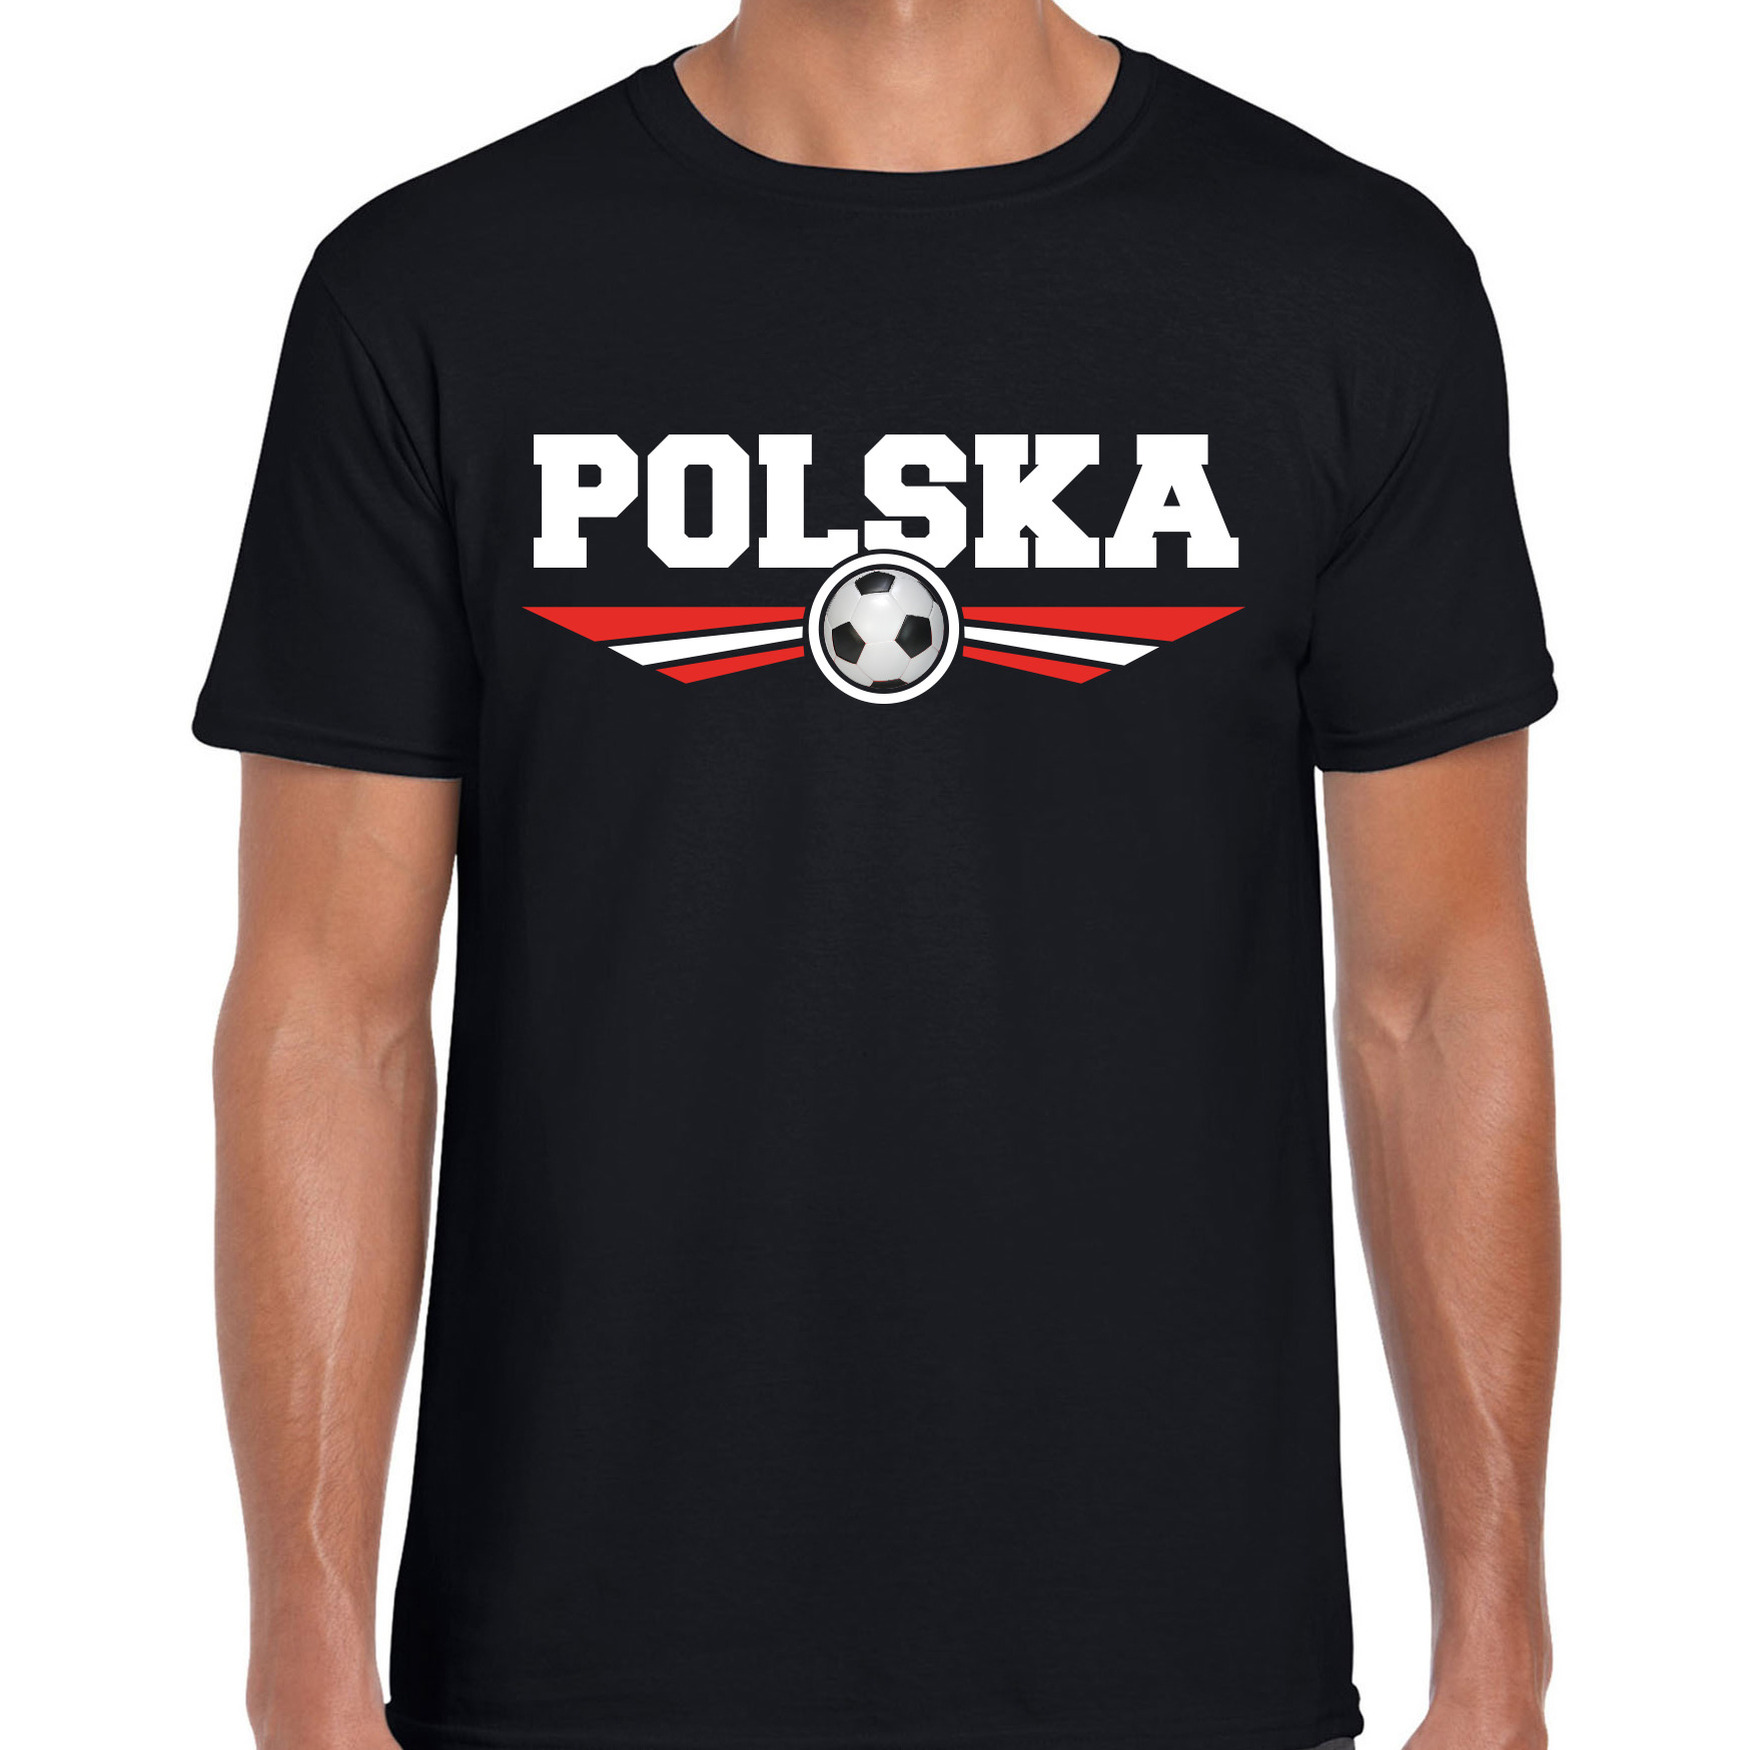 Polen-Polska landen-voetbal t-shirt zwart heren